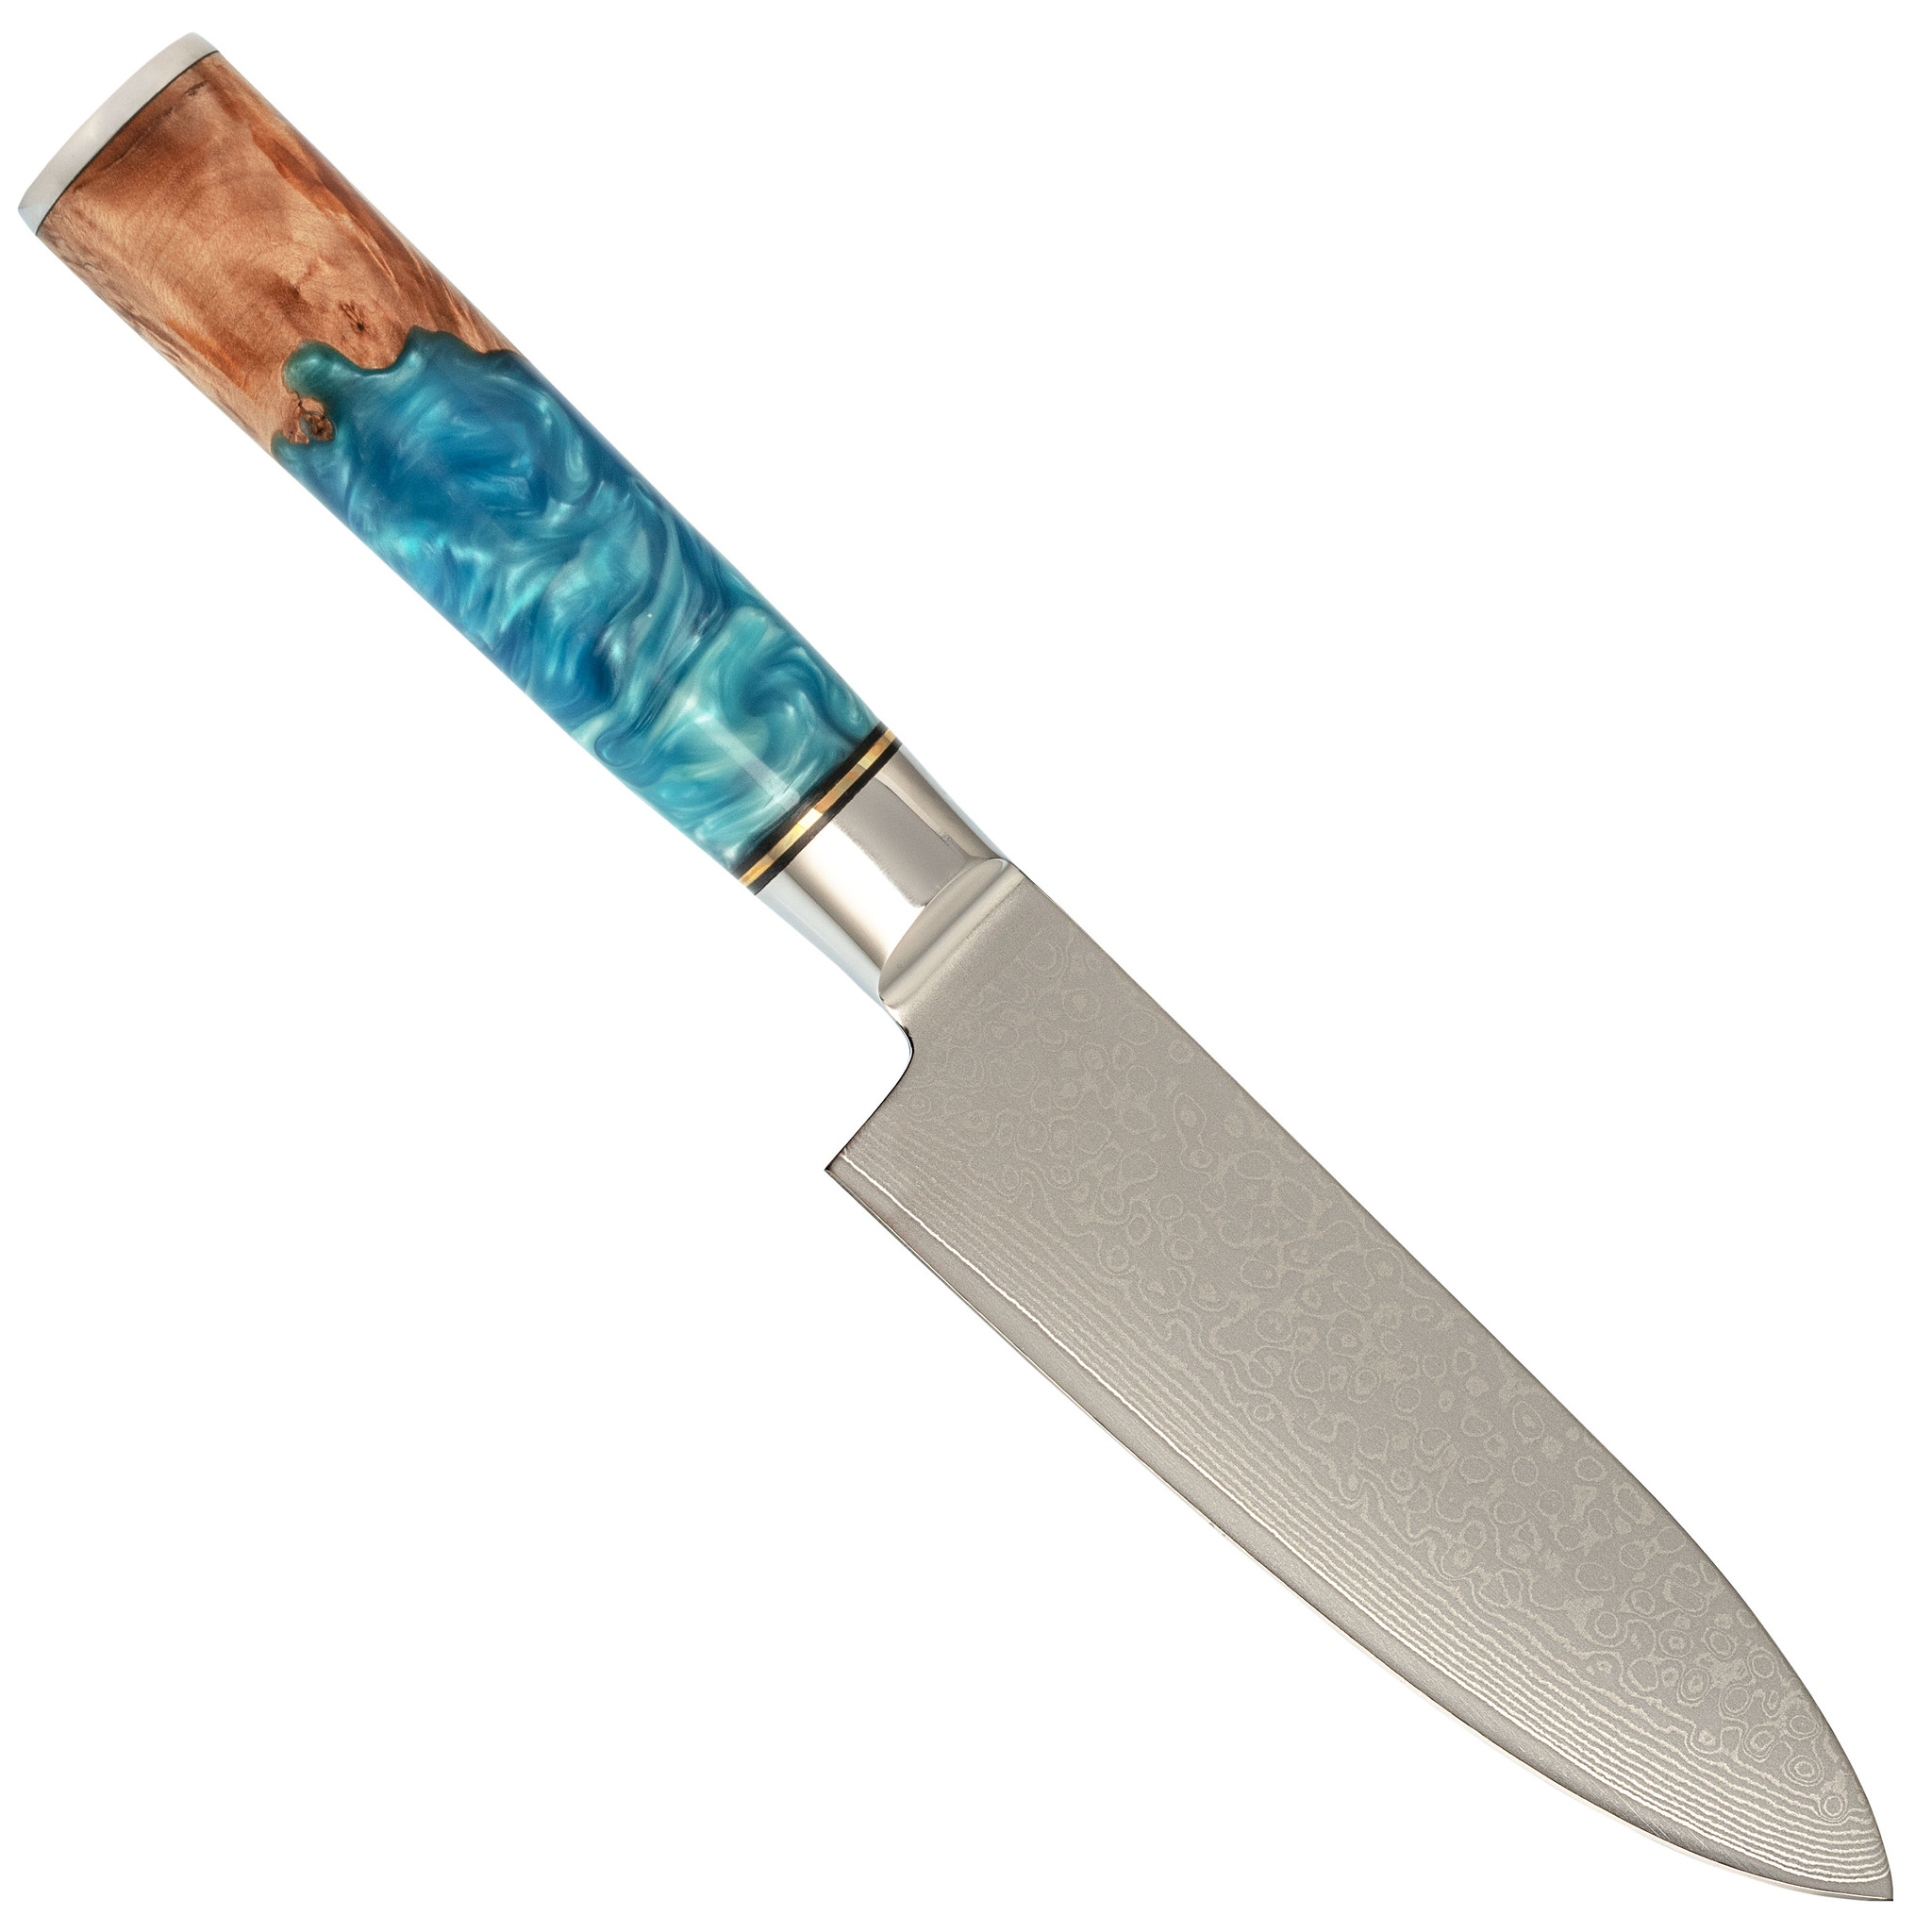 Нож кухонный Tuotown DM003, сталь VG-10, рукоять дерево/эпоксидка - фото 4